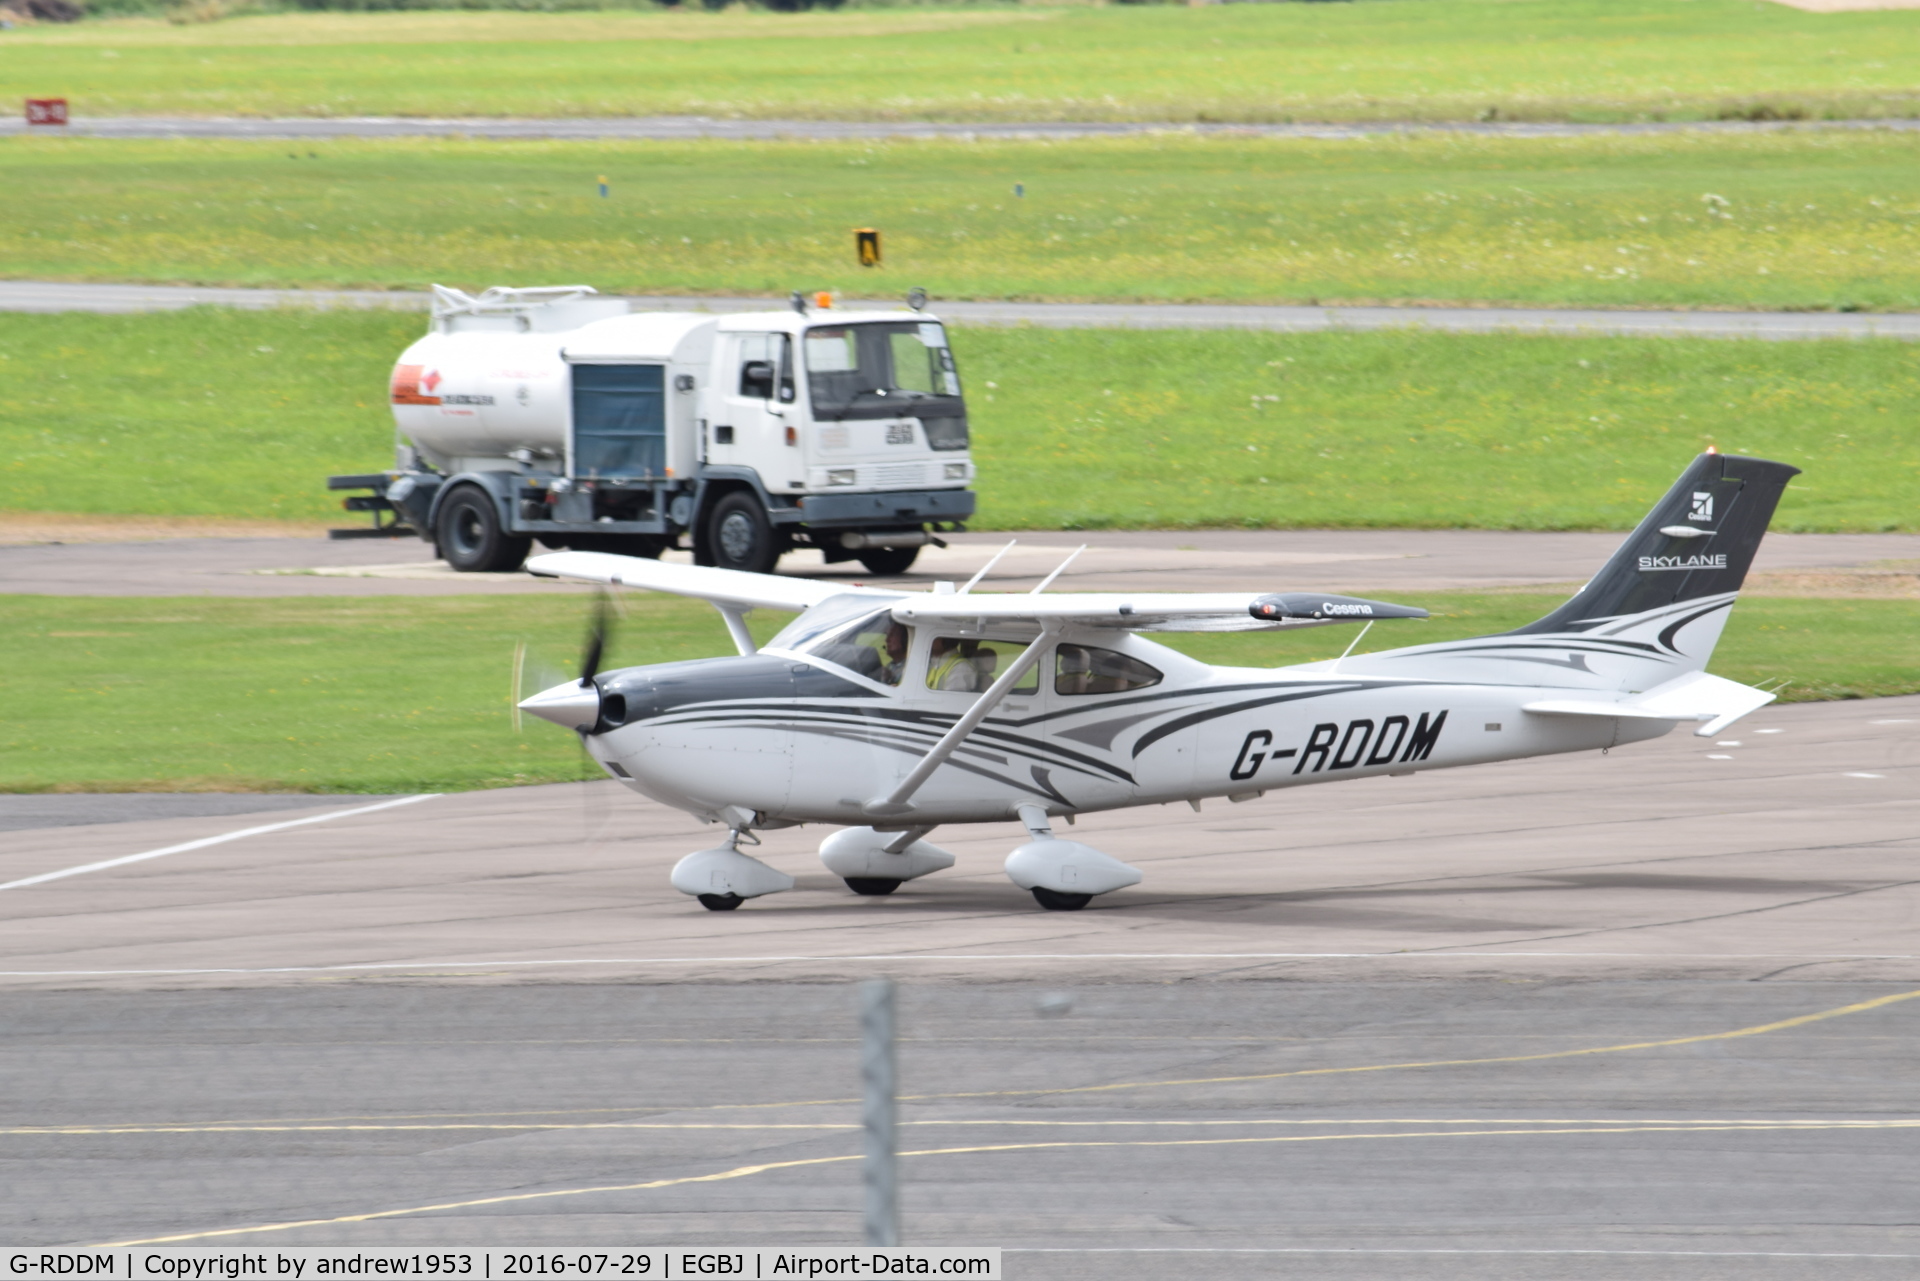 G-RDDM, 2015 Cessna 182T Skylane Skylane C/N 18282387, G-RDDM at Gloucestershire Airport.